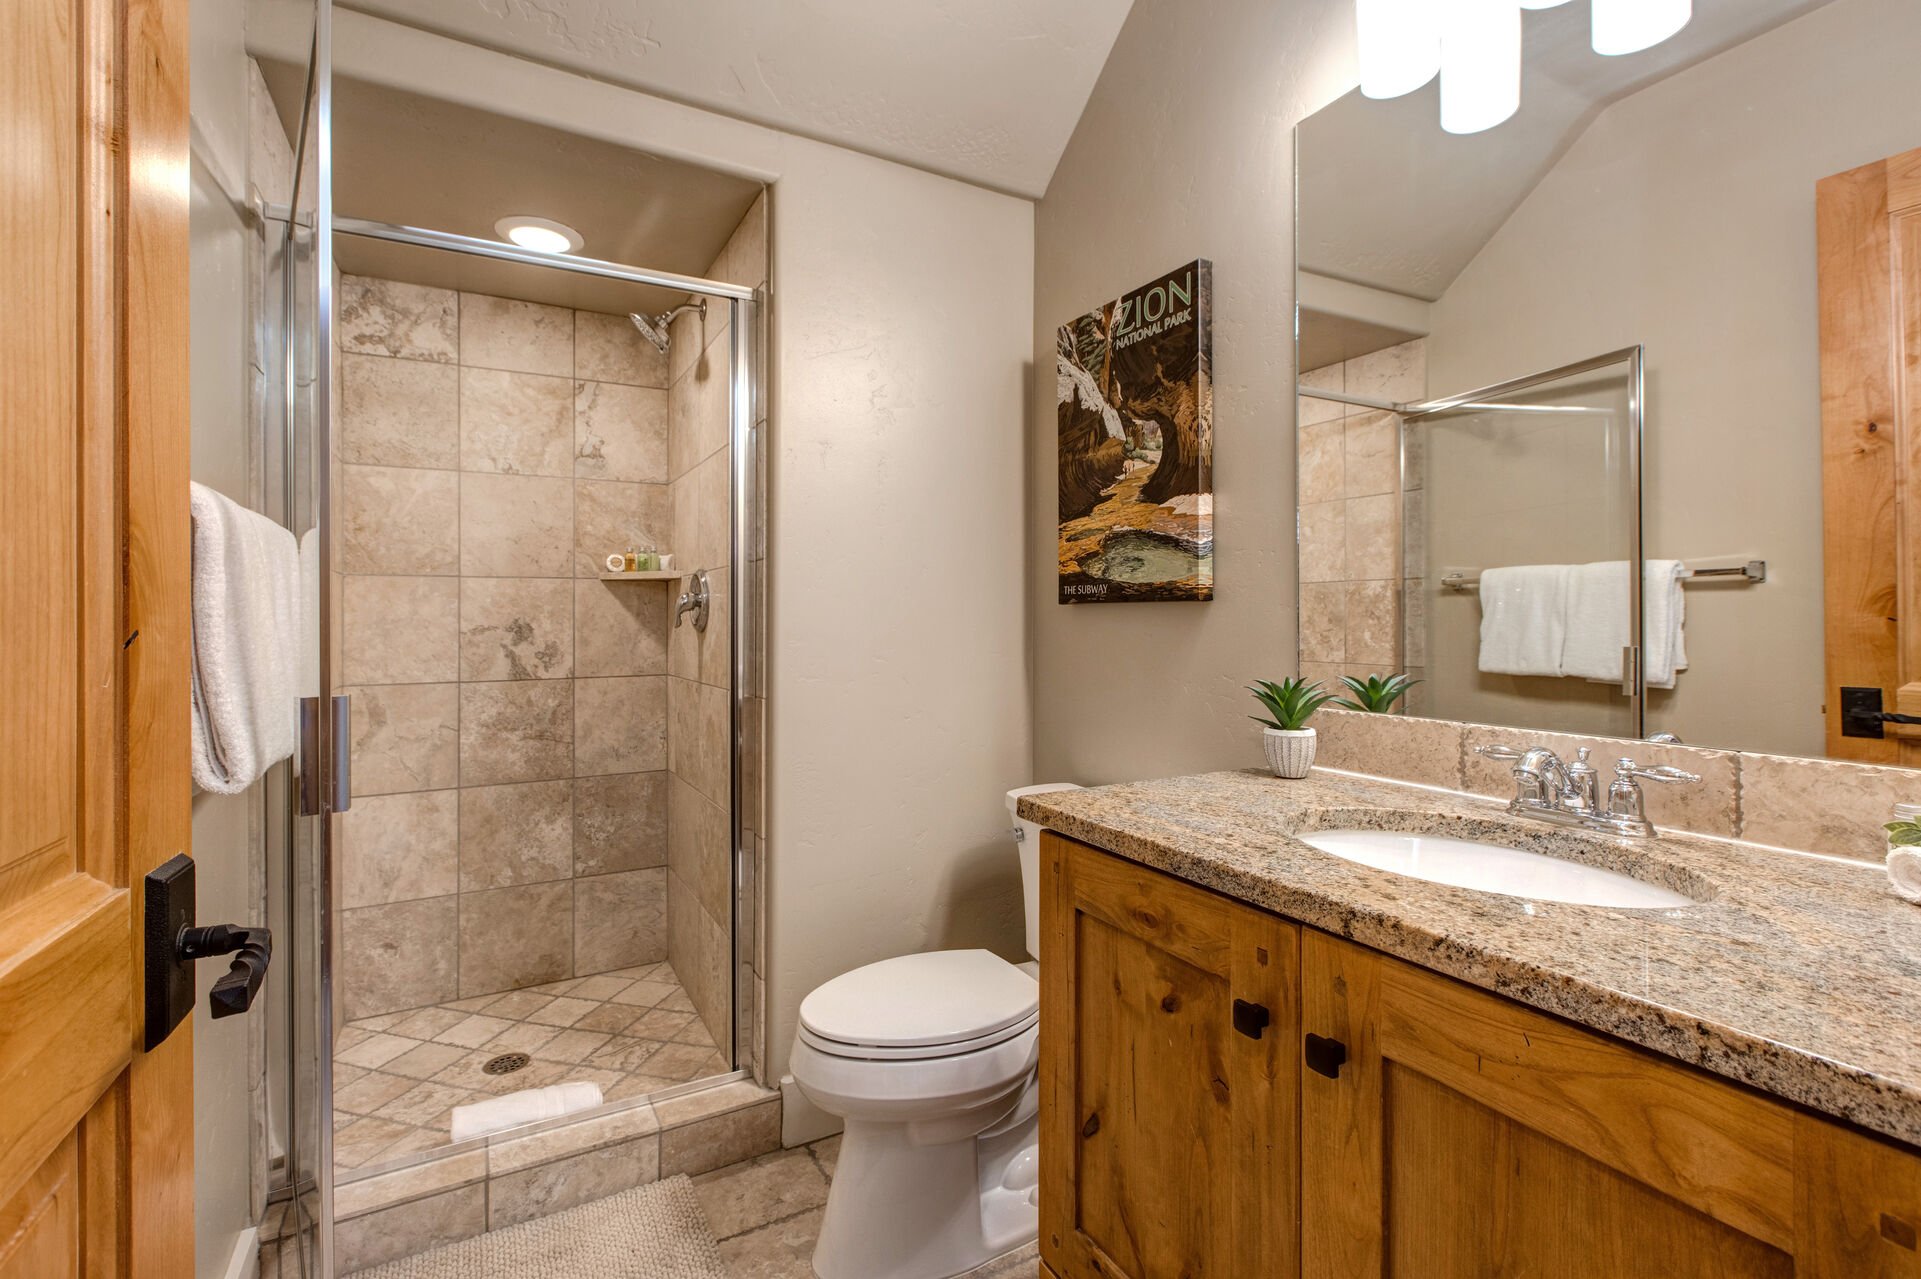 Main Level shared full bathroom with tiled shower